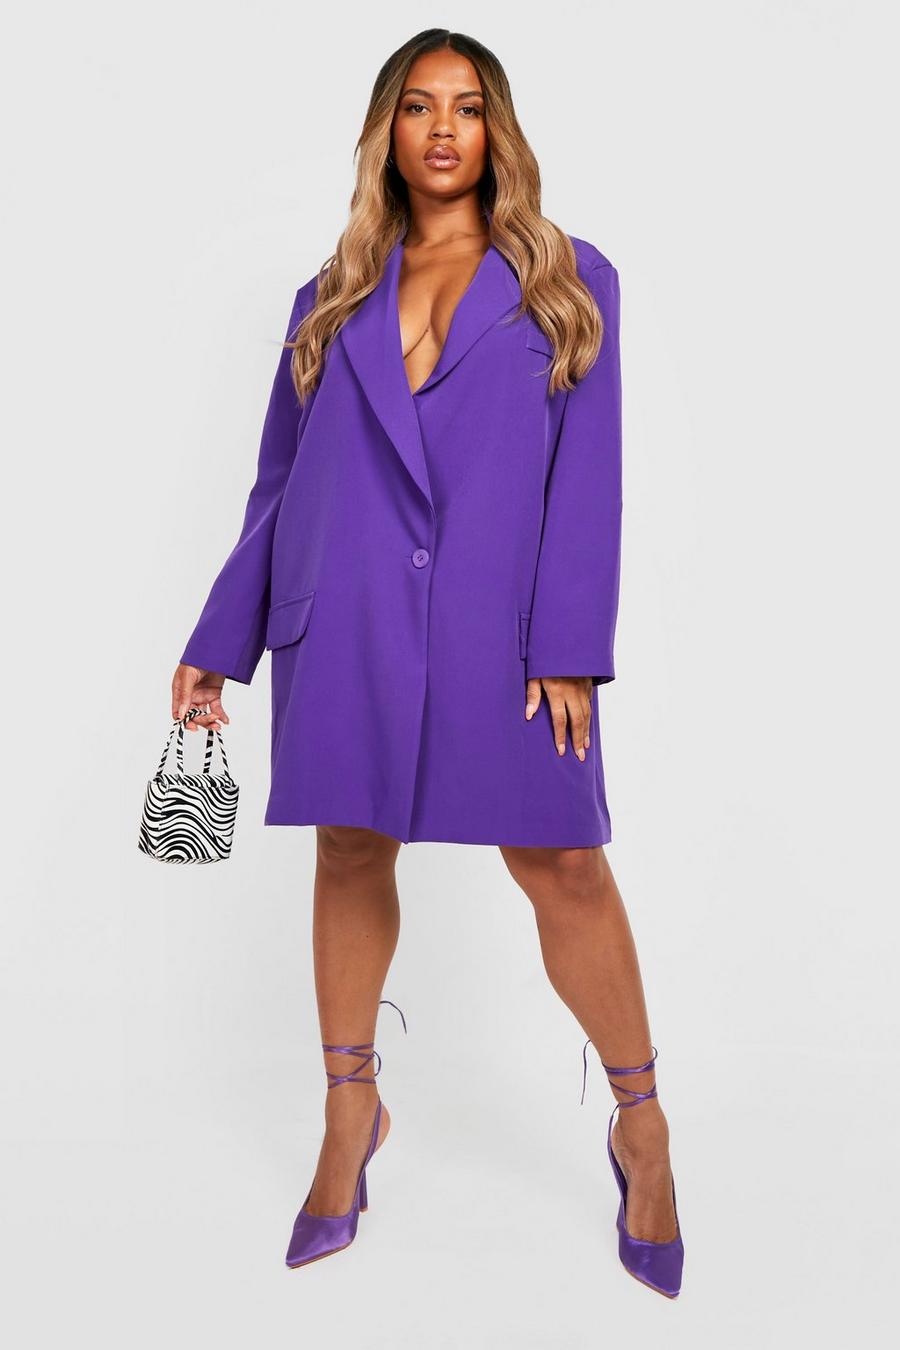 Jewel purple Plus Extreme Oversized Blazer Dress 